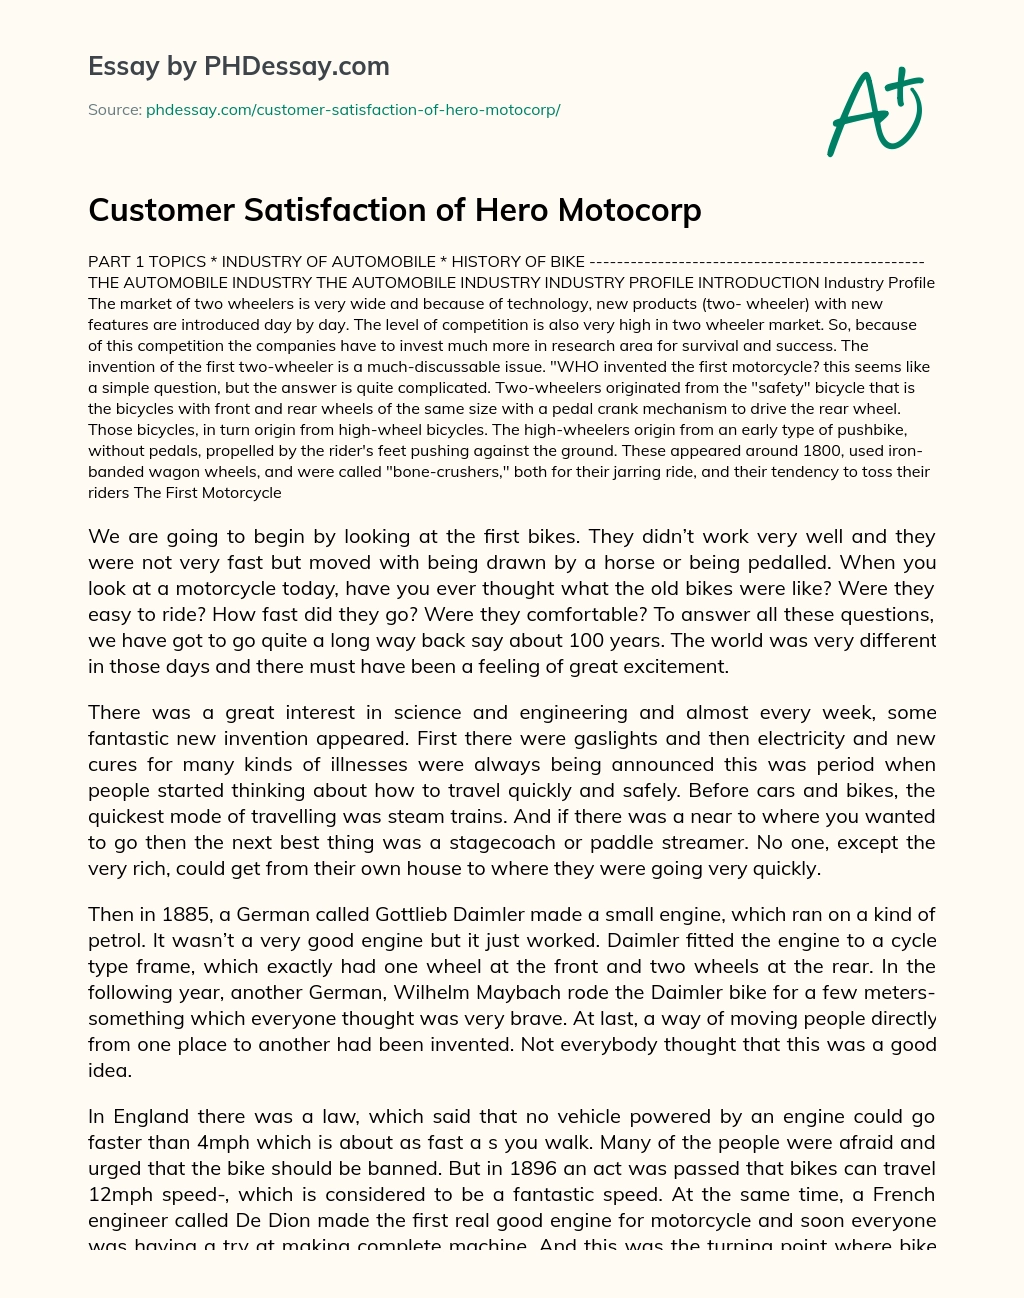 Customer Satisfaction of Hero Motocorp essay